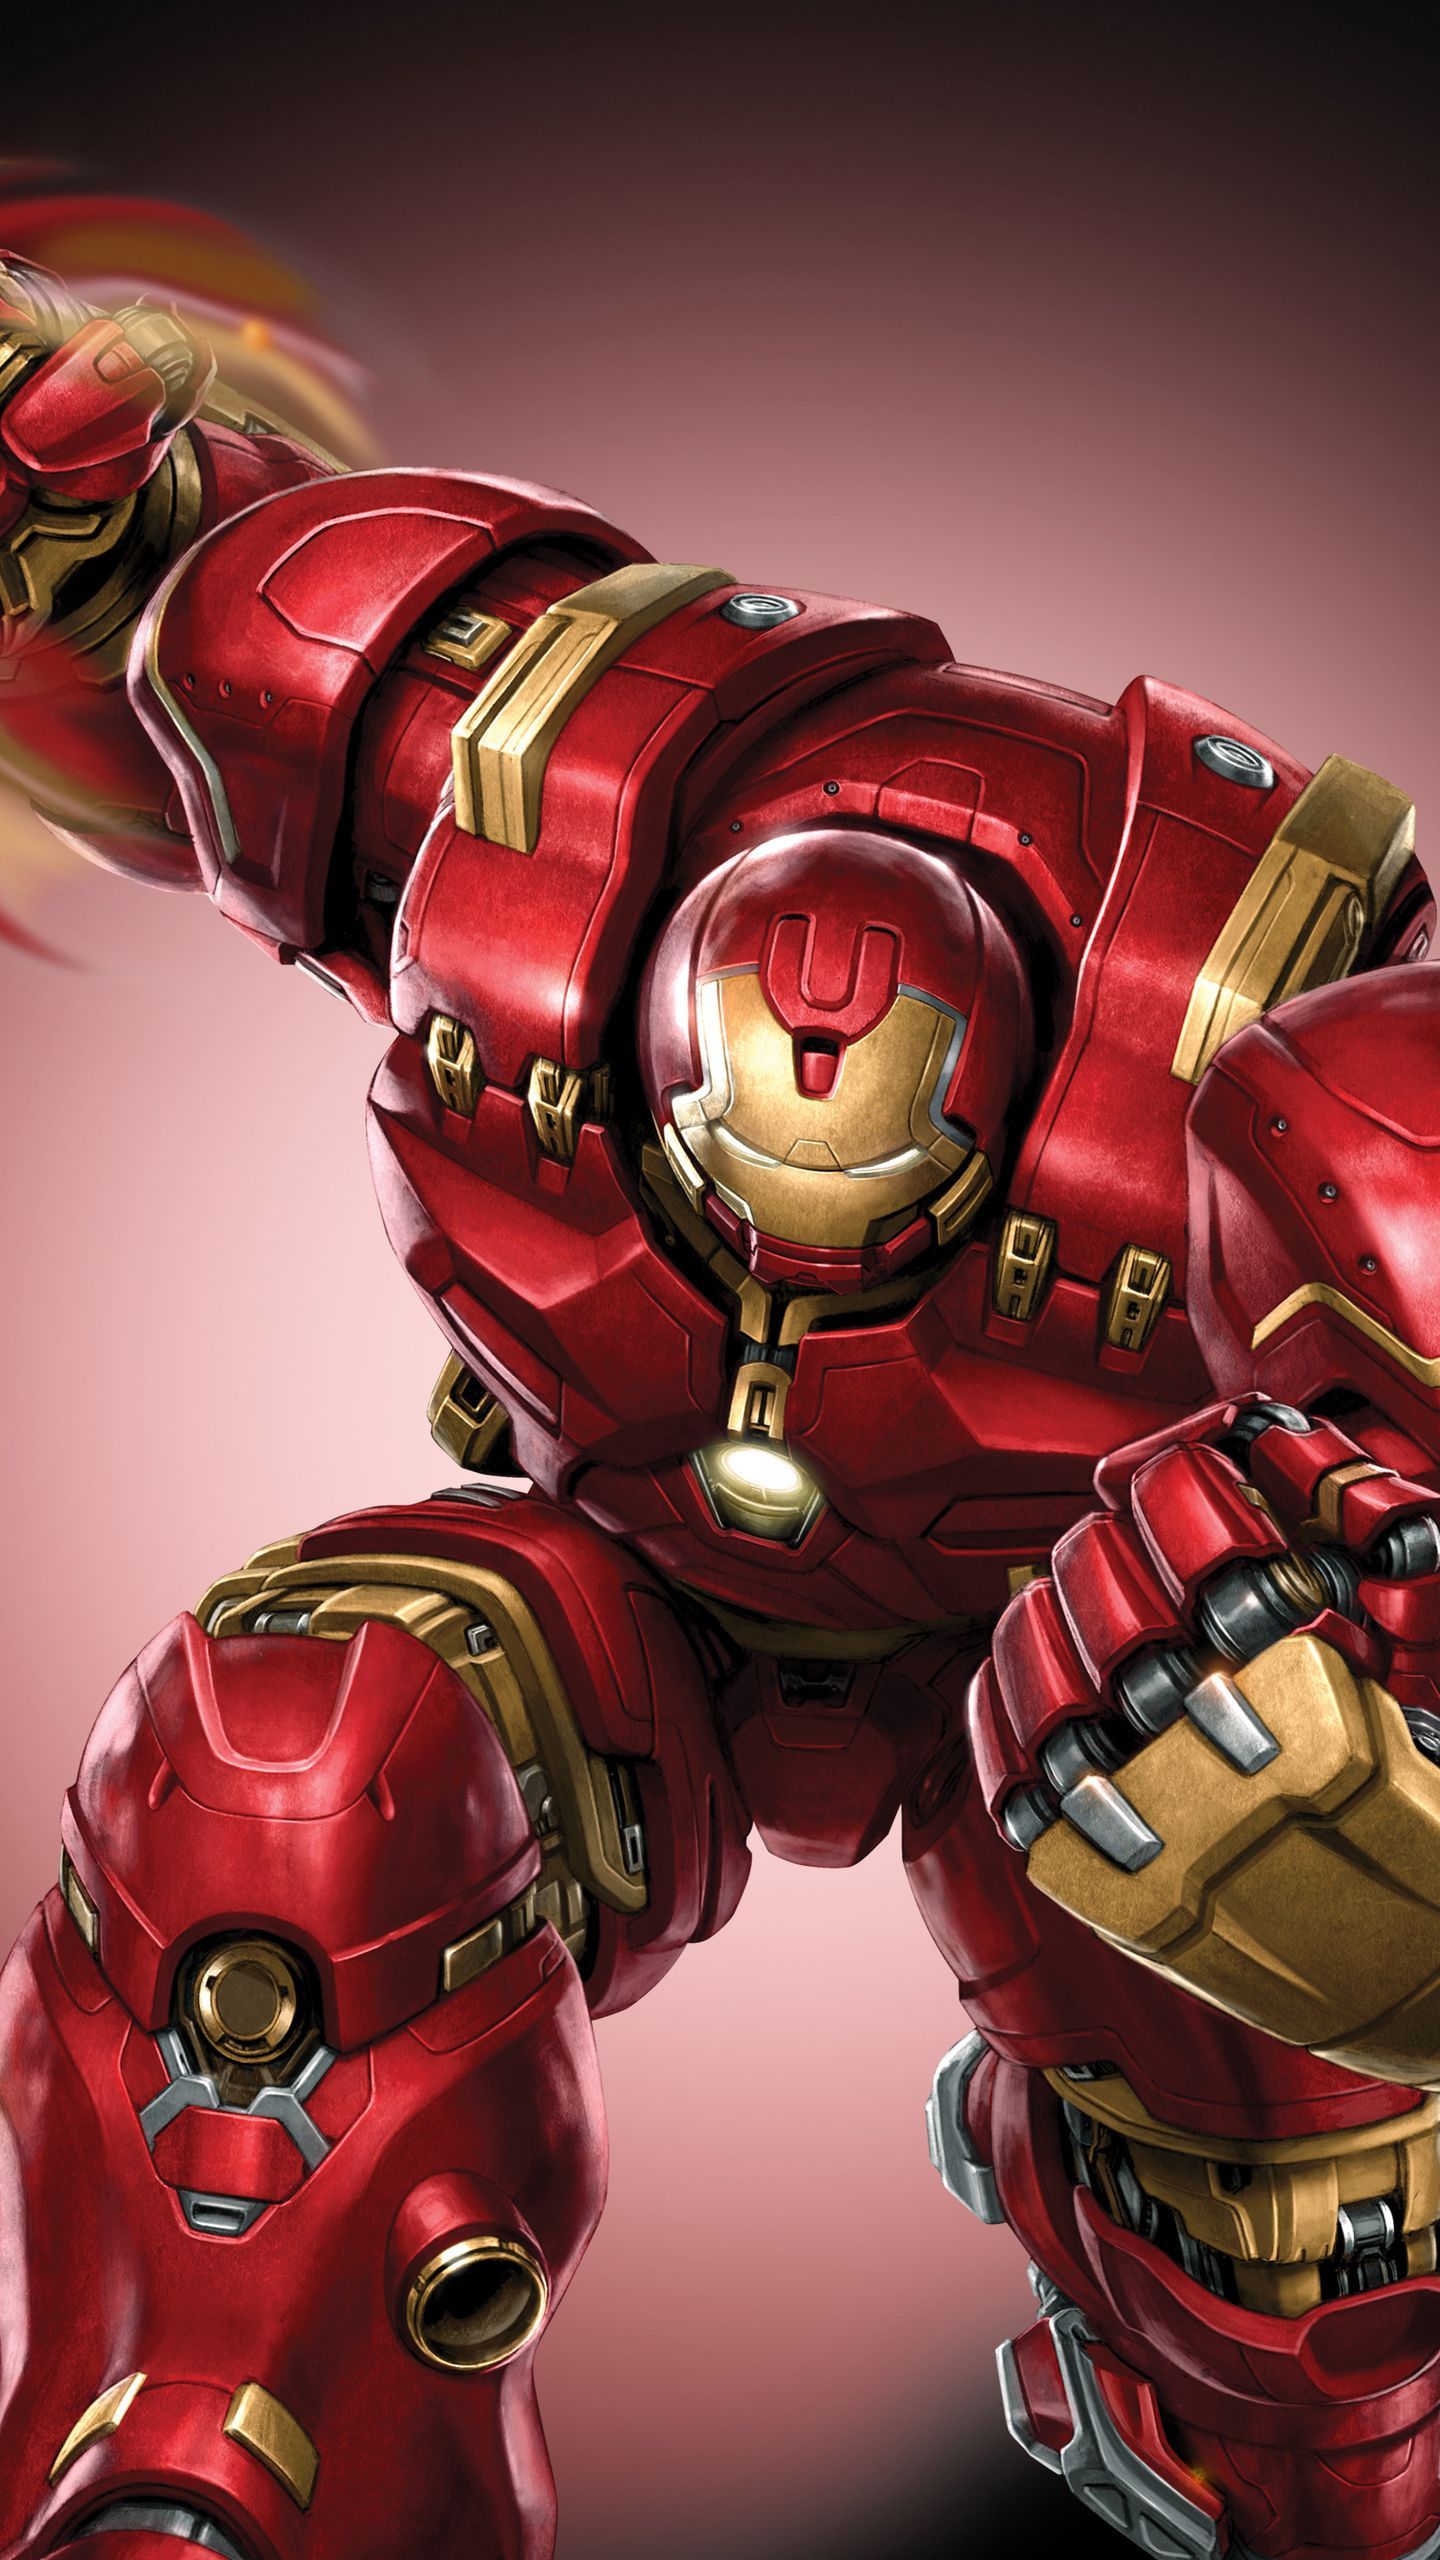 Iron Man Hulkbuster Wallpaper. Iron man avengers, Iron man hulkbuster, Hulkbuster